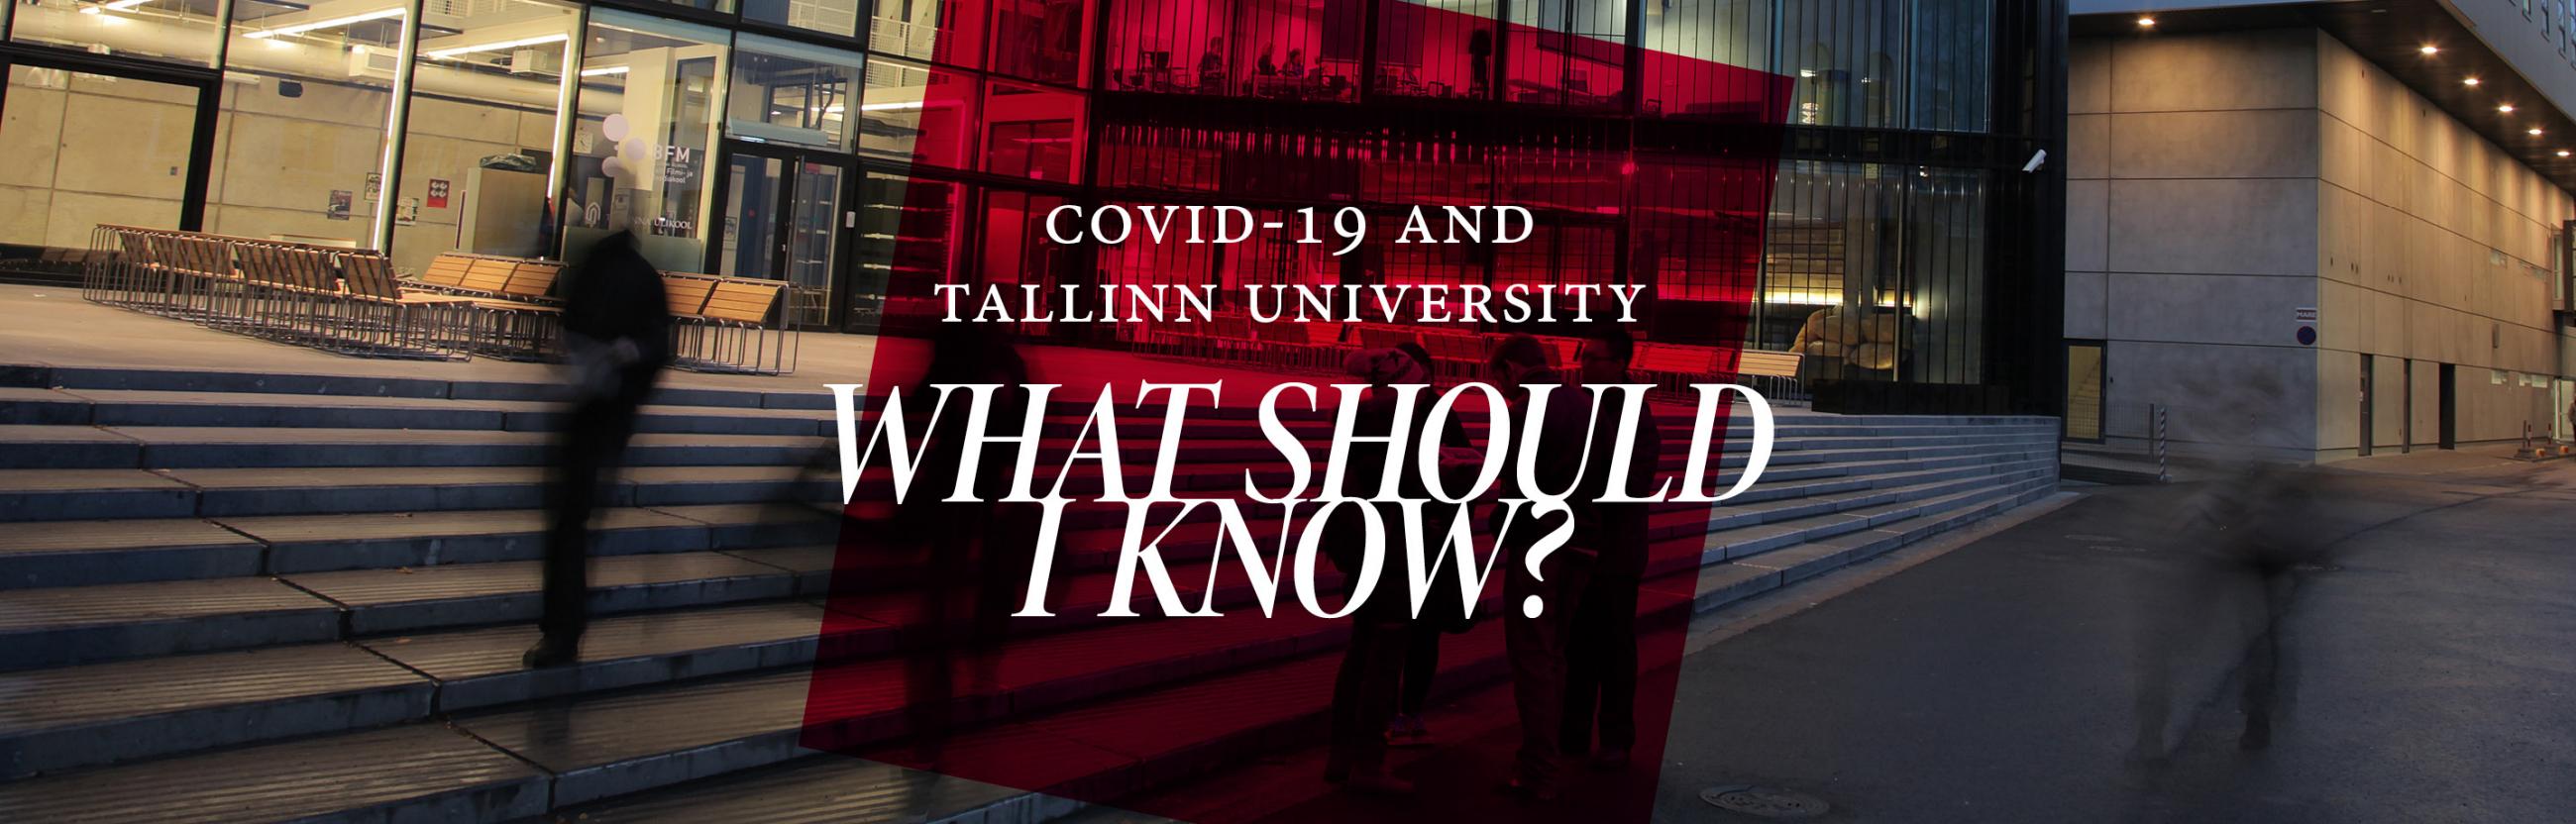 Covid-19 and Tallinn University